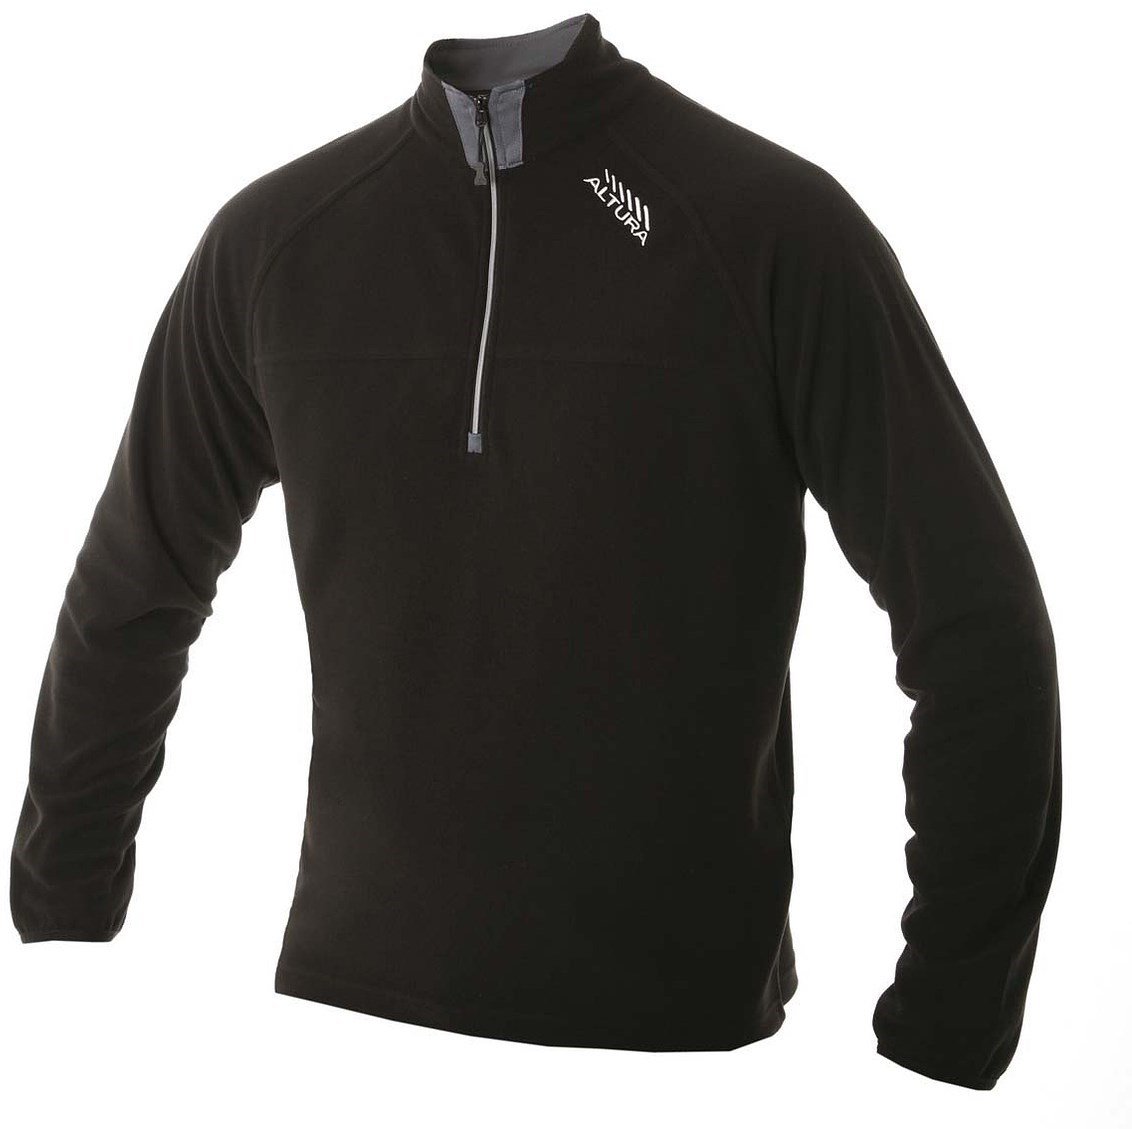 Altura Fleece Long Sleeve Cycling Jersey 2013 product image